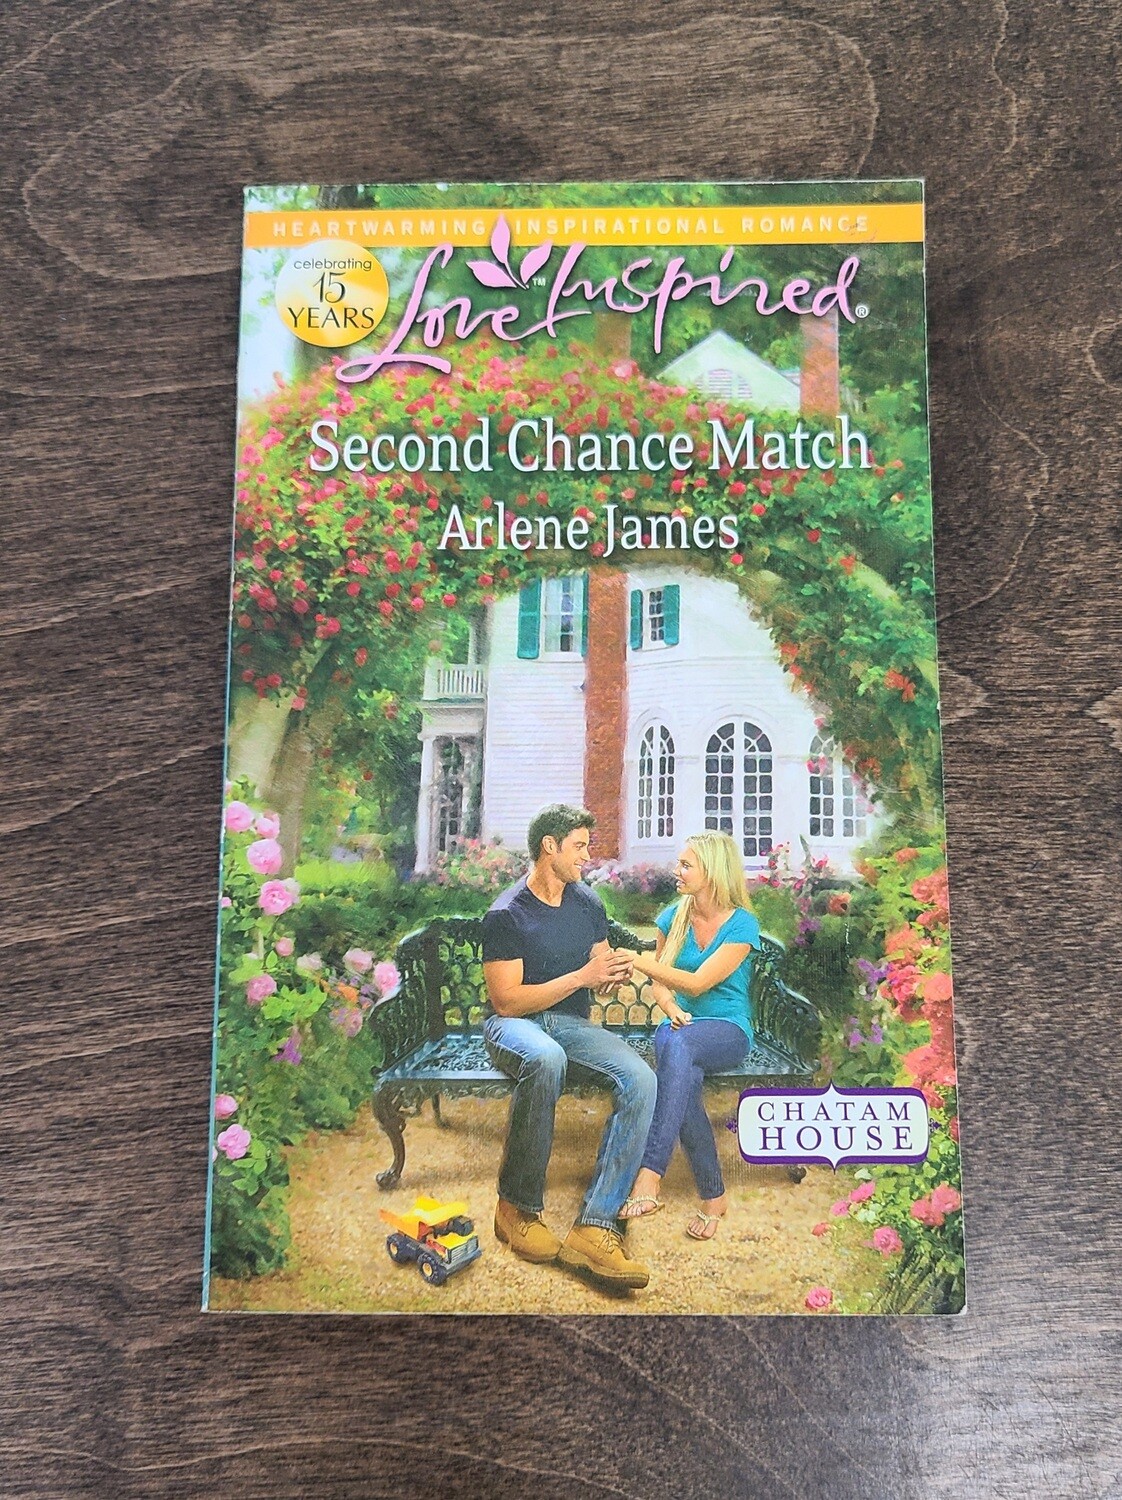 Second Chance Match by Arlene James